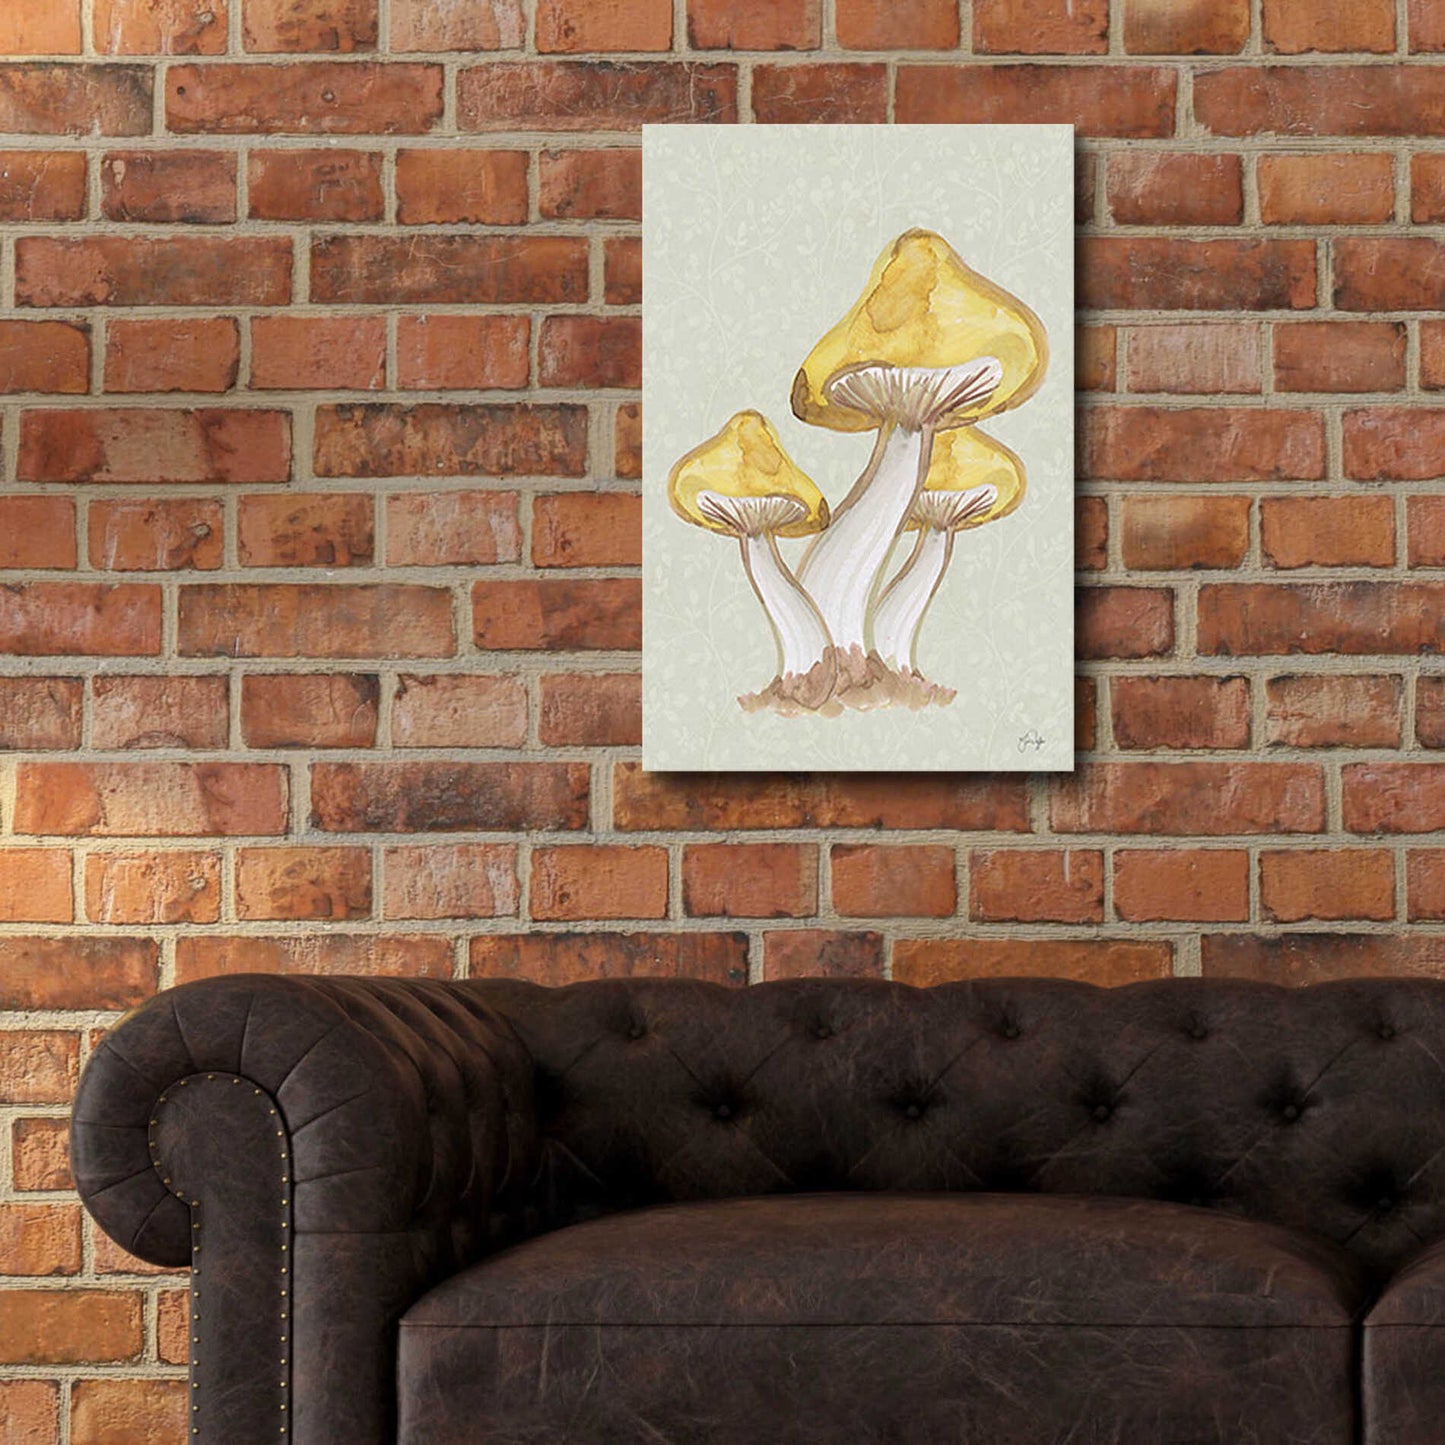 Epic Art 'Calming Mushrooms' by Yass Naffas Designs, Acrylic Glass Wall Art,16x24